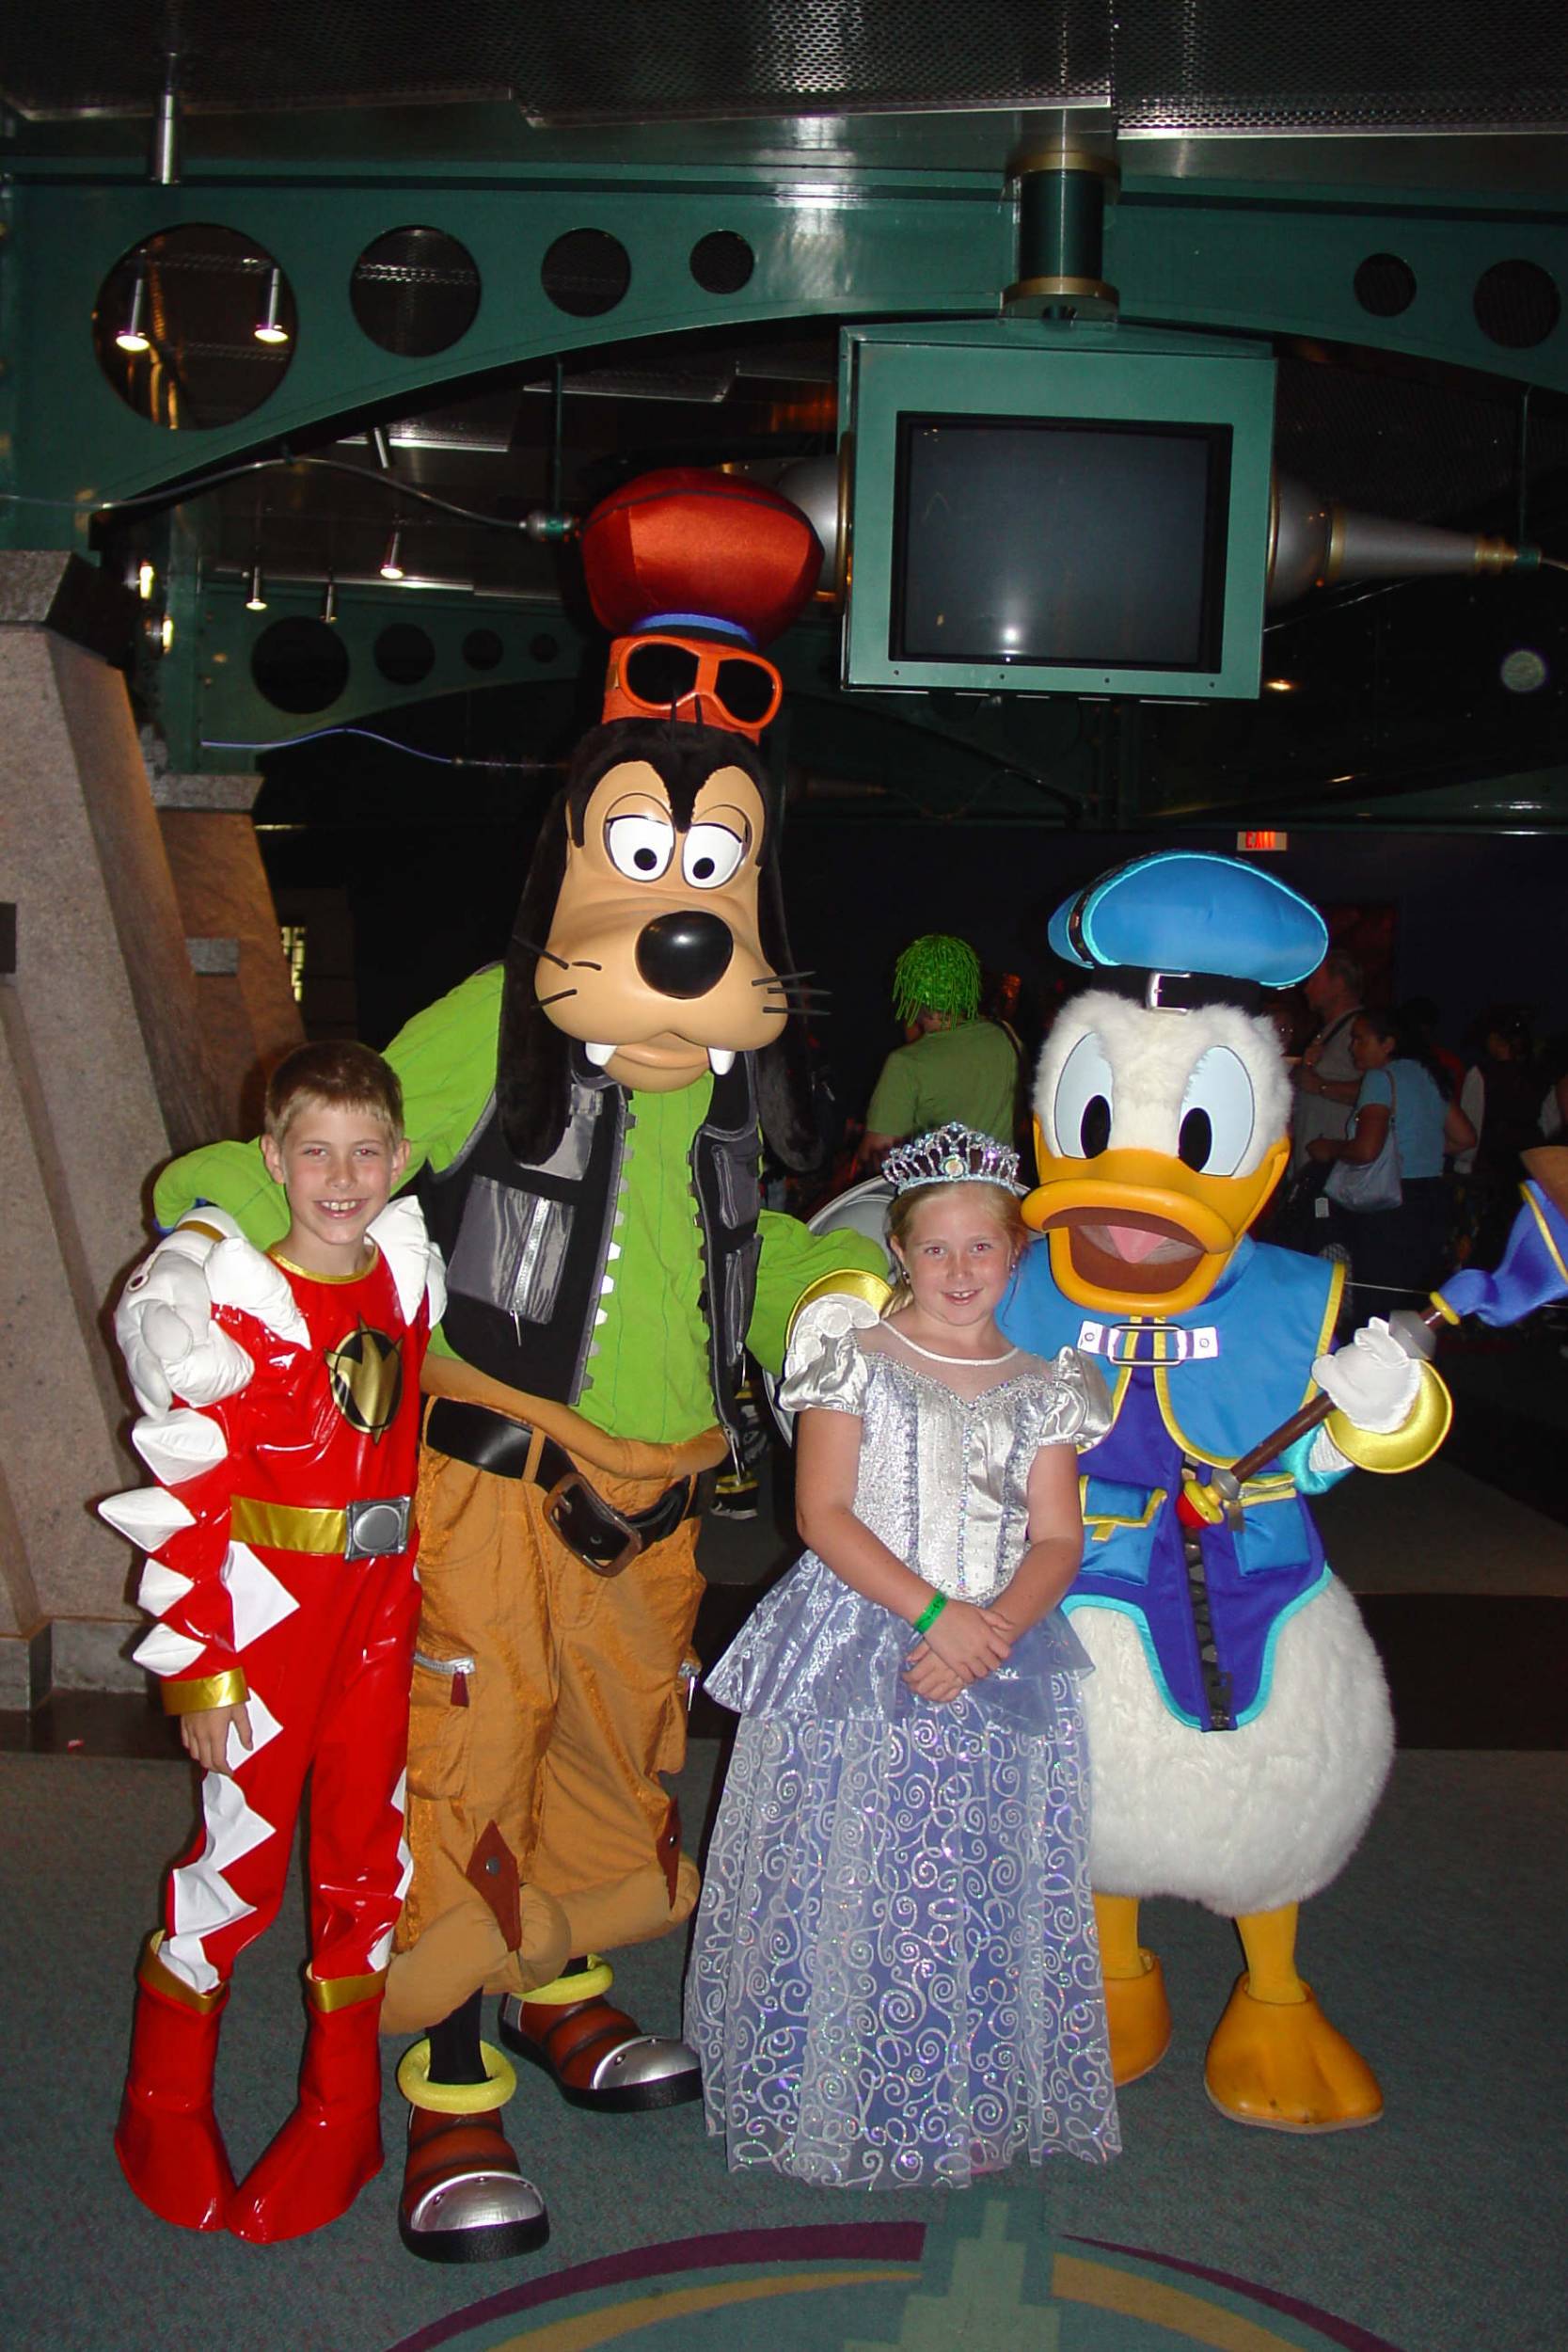 Goofy and Donald from Kingdom Hearts